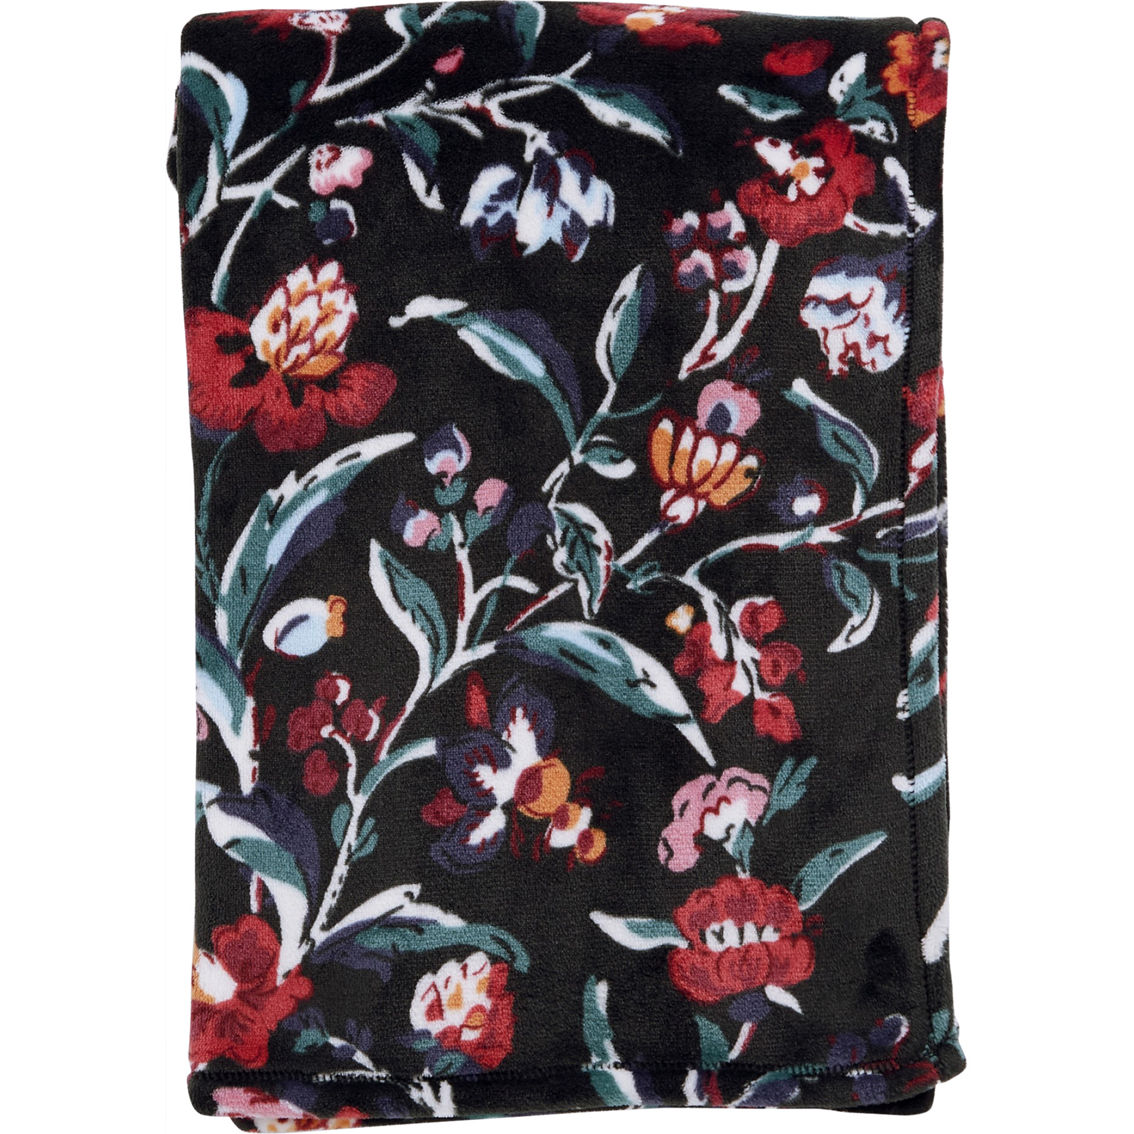 Vera Bradley Plush Throw Blanket, Perennials Noir - Image 2 of 3